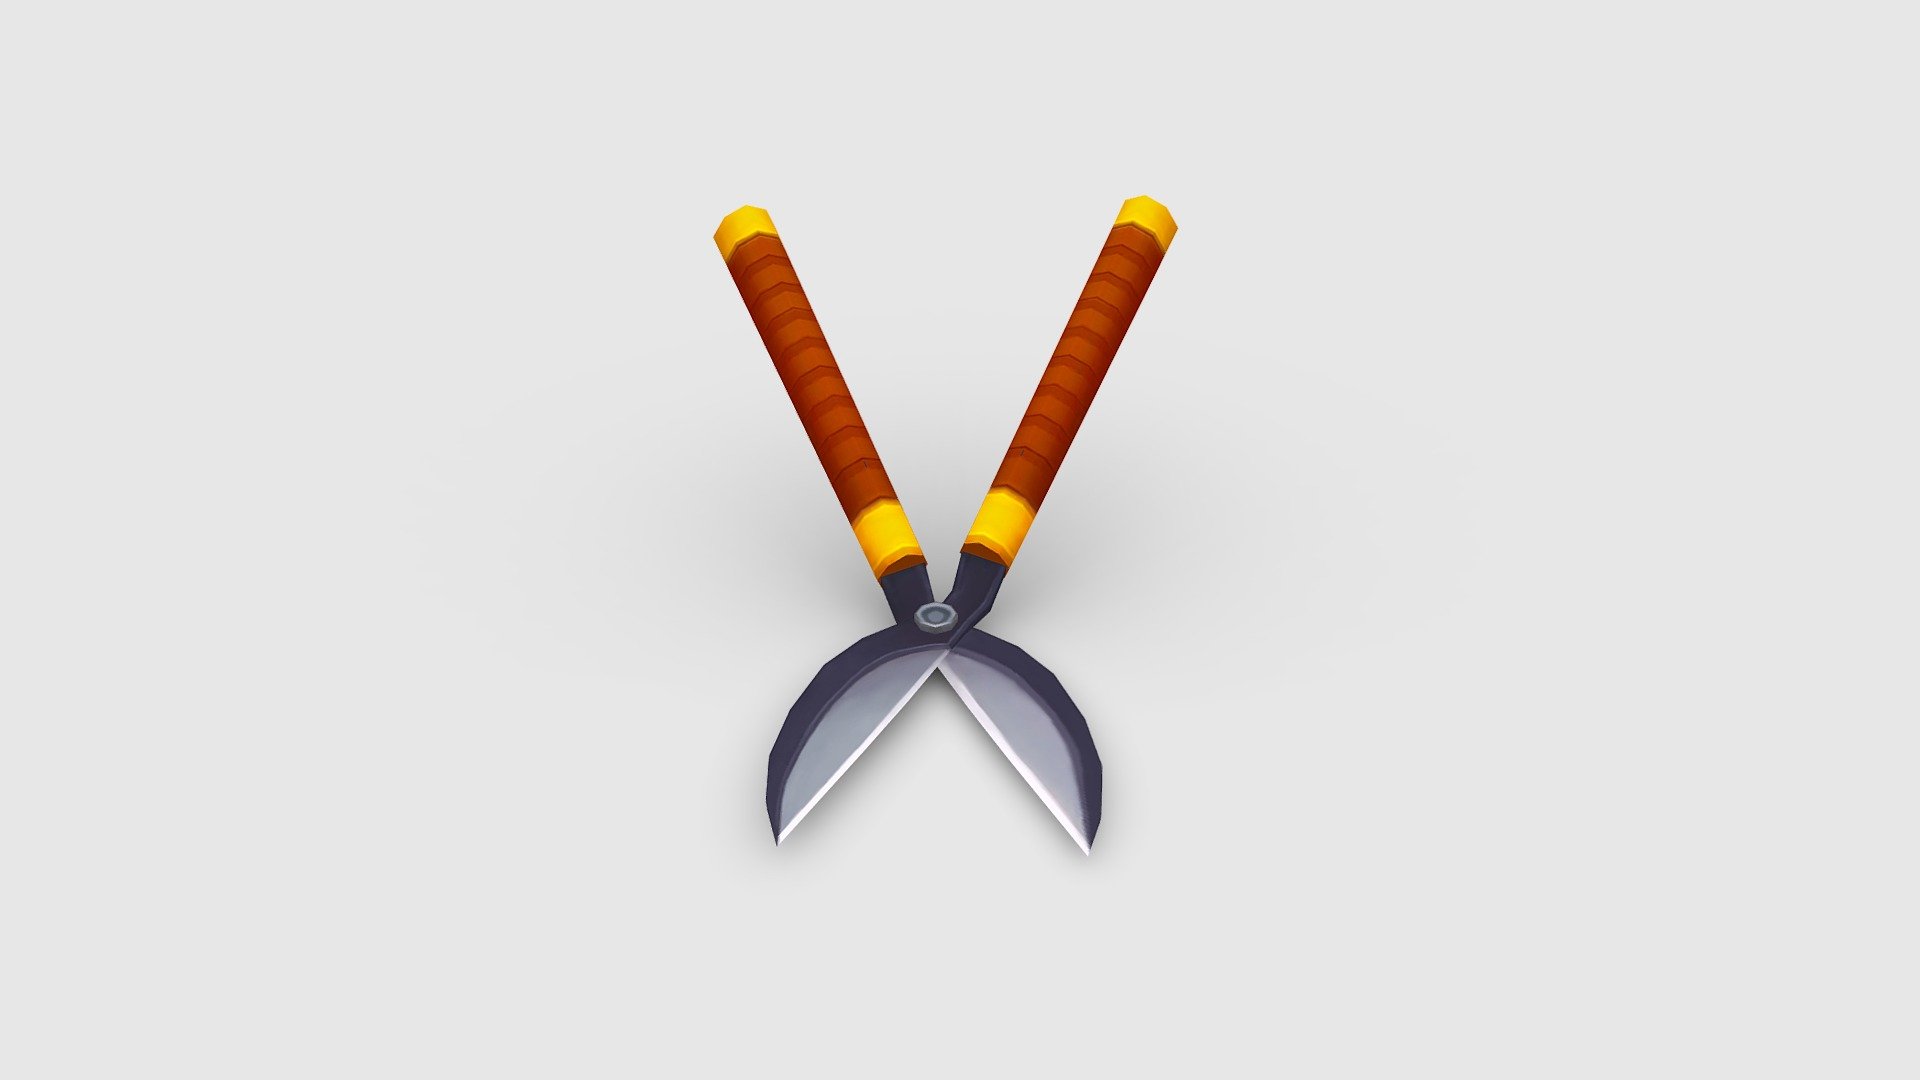 Cartoon gardening scissors - Pruning tool Low-poly 3D model - Cartoon gardening scissors - Pruning tool - 3D model by ler_cartoon (@lerrrrr) 3d model